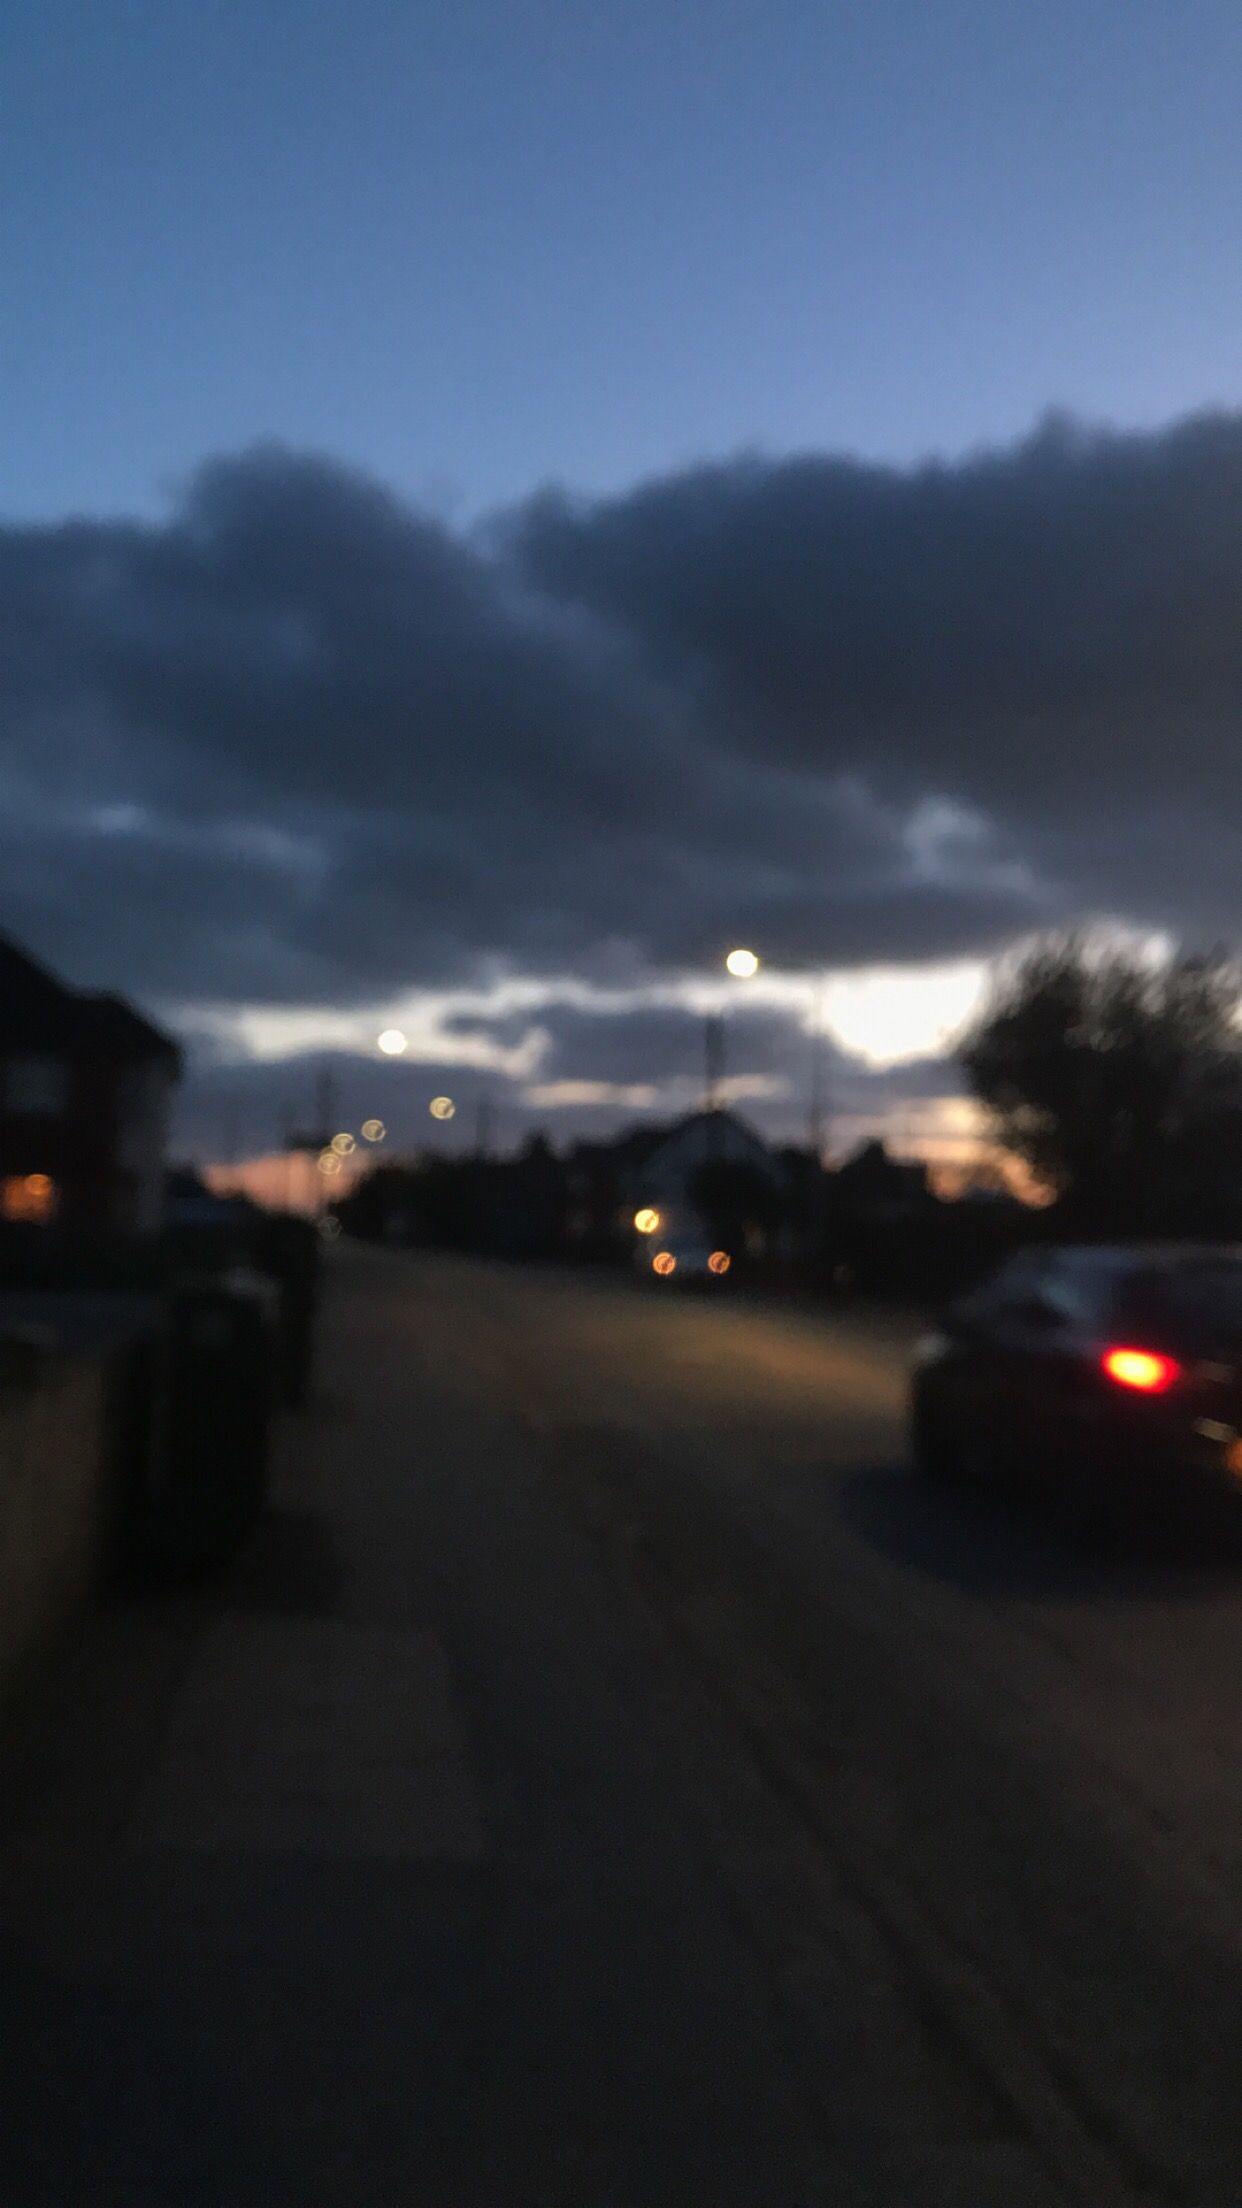 Late night walk ;) #Night #Clouds #Calm #Lights #Blurry #Cold